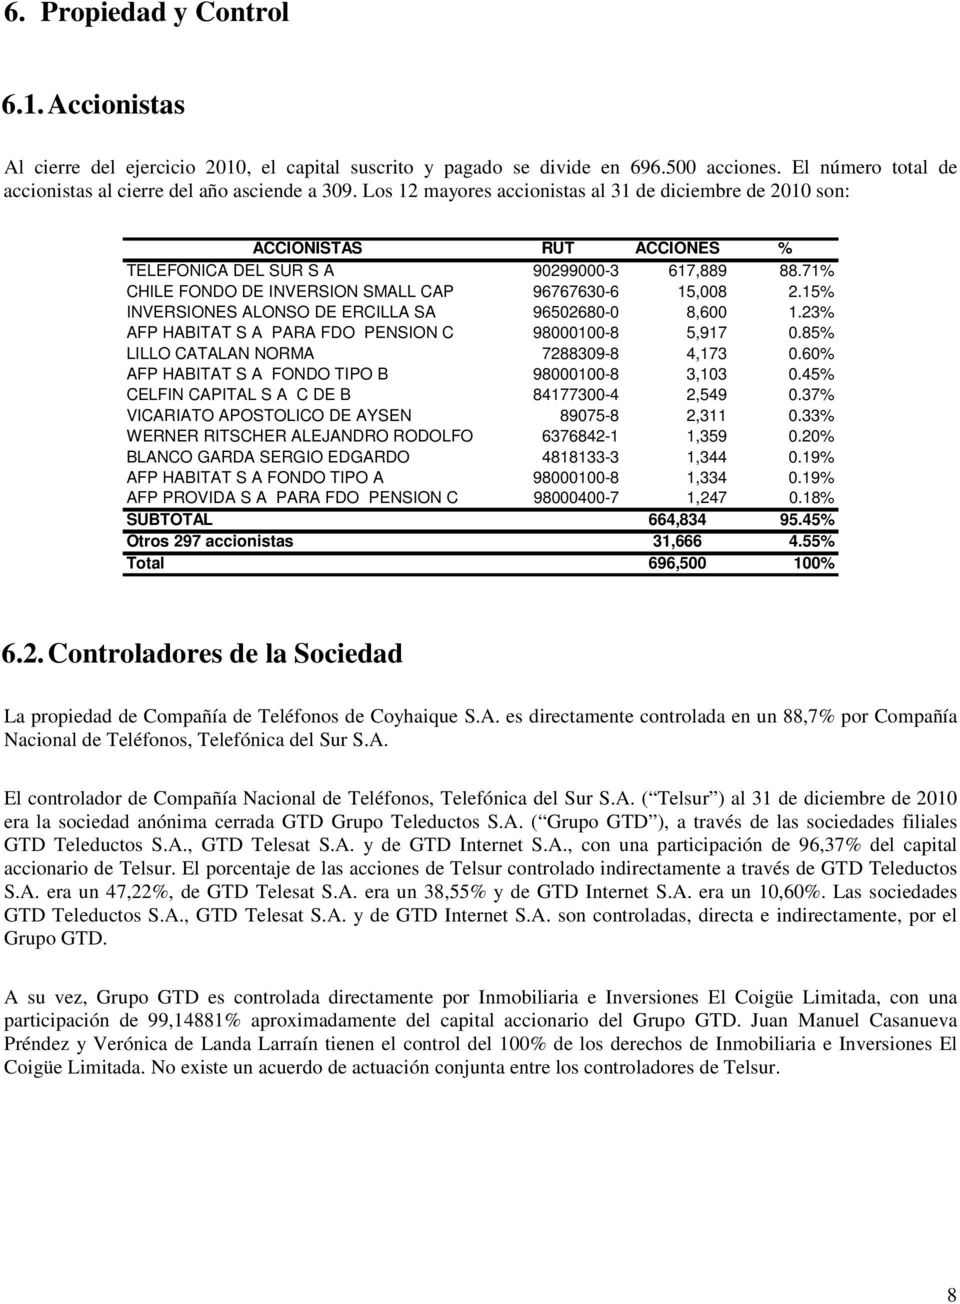 15% INVERSIONES ALONSO DE ERCILLA SA 96502680-0 8,600 1.23% AFP HABITAT S A PARA FDO PENSION C 98000100-8 5,917 0.85% LILLO CATALAN NORMA 7288309-8 4,173 0.